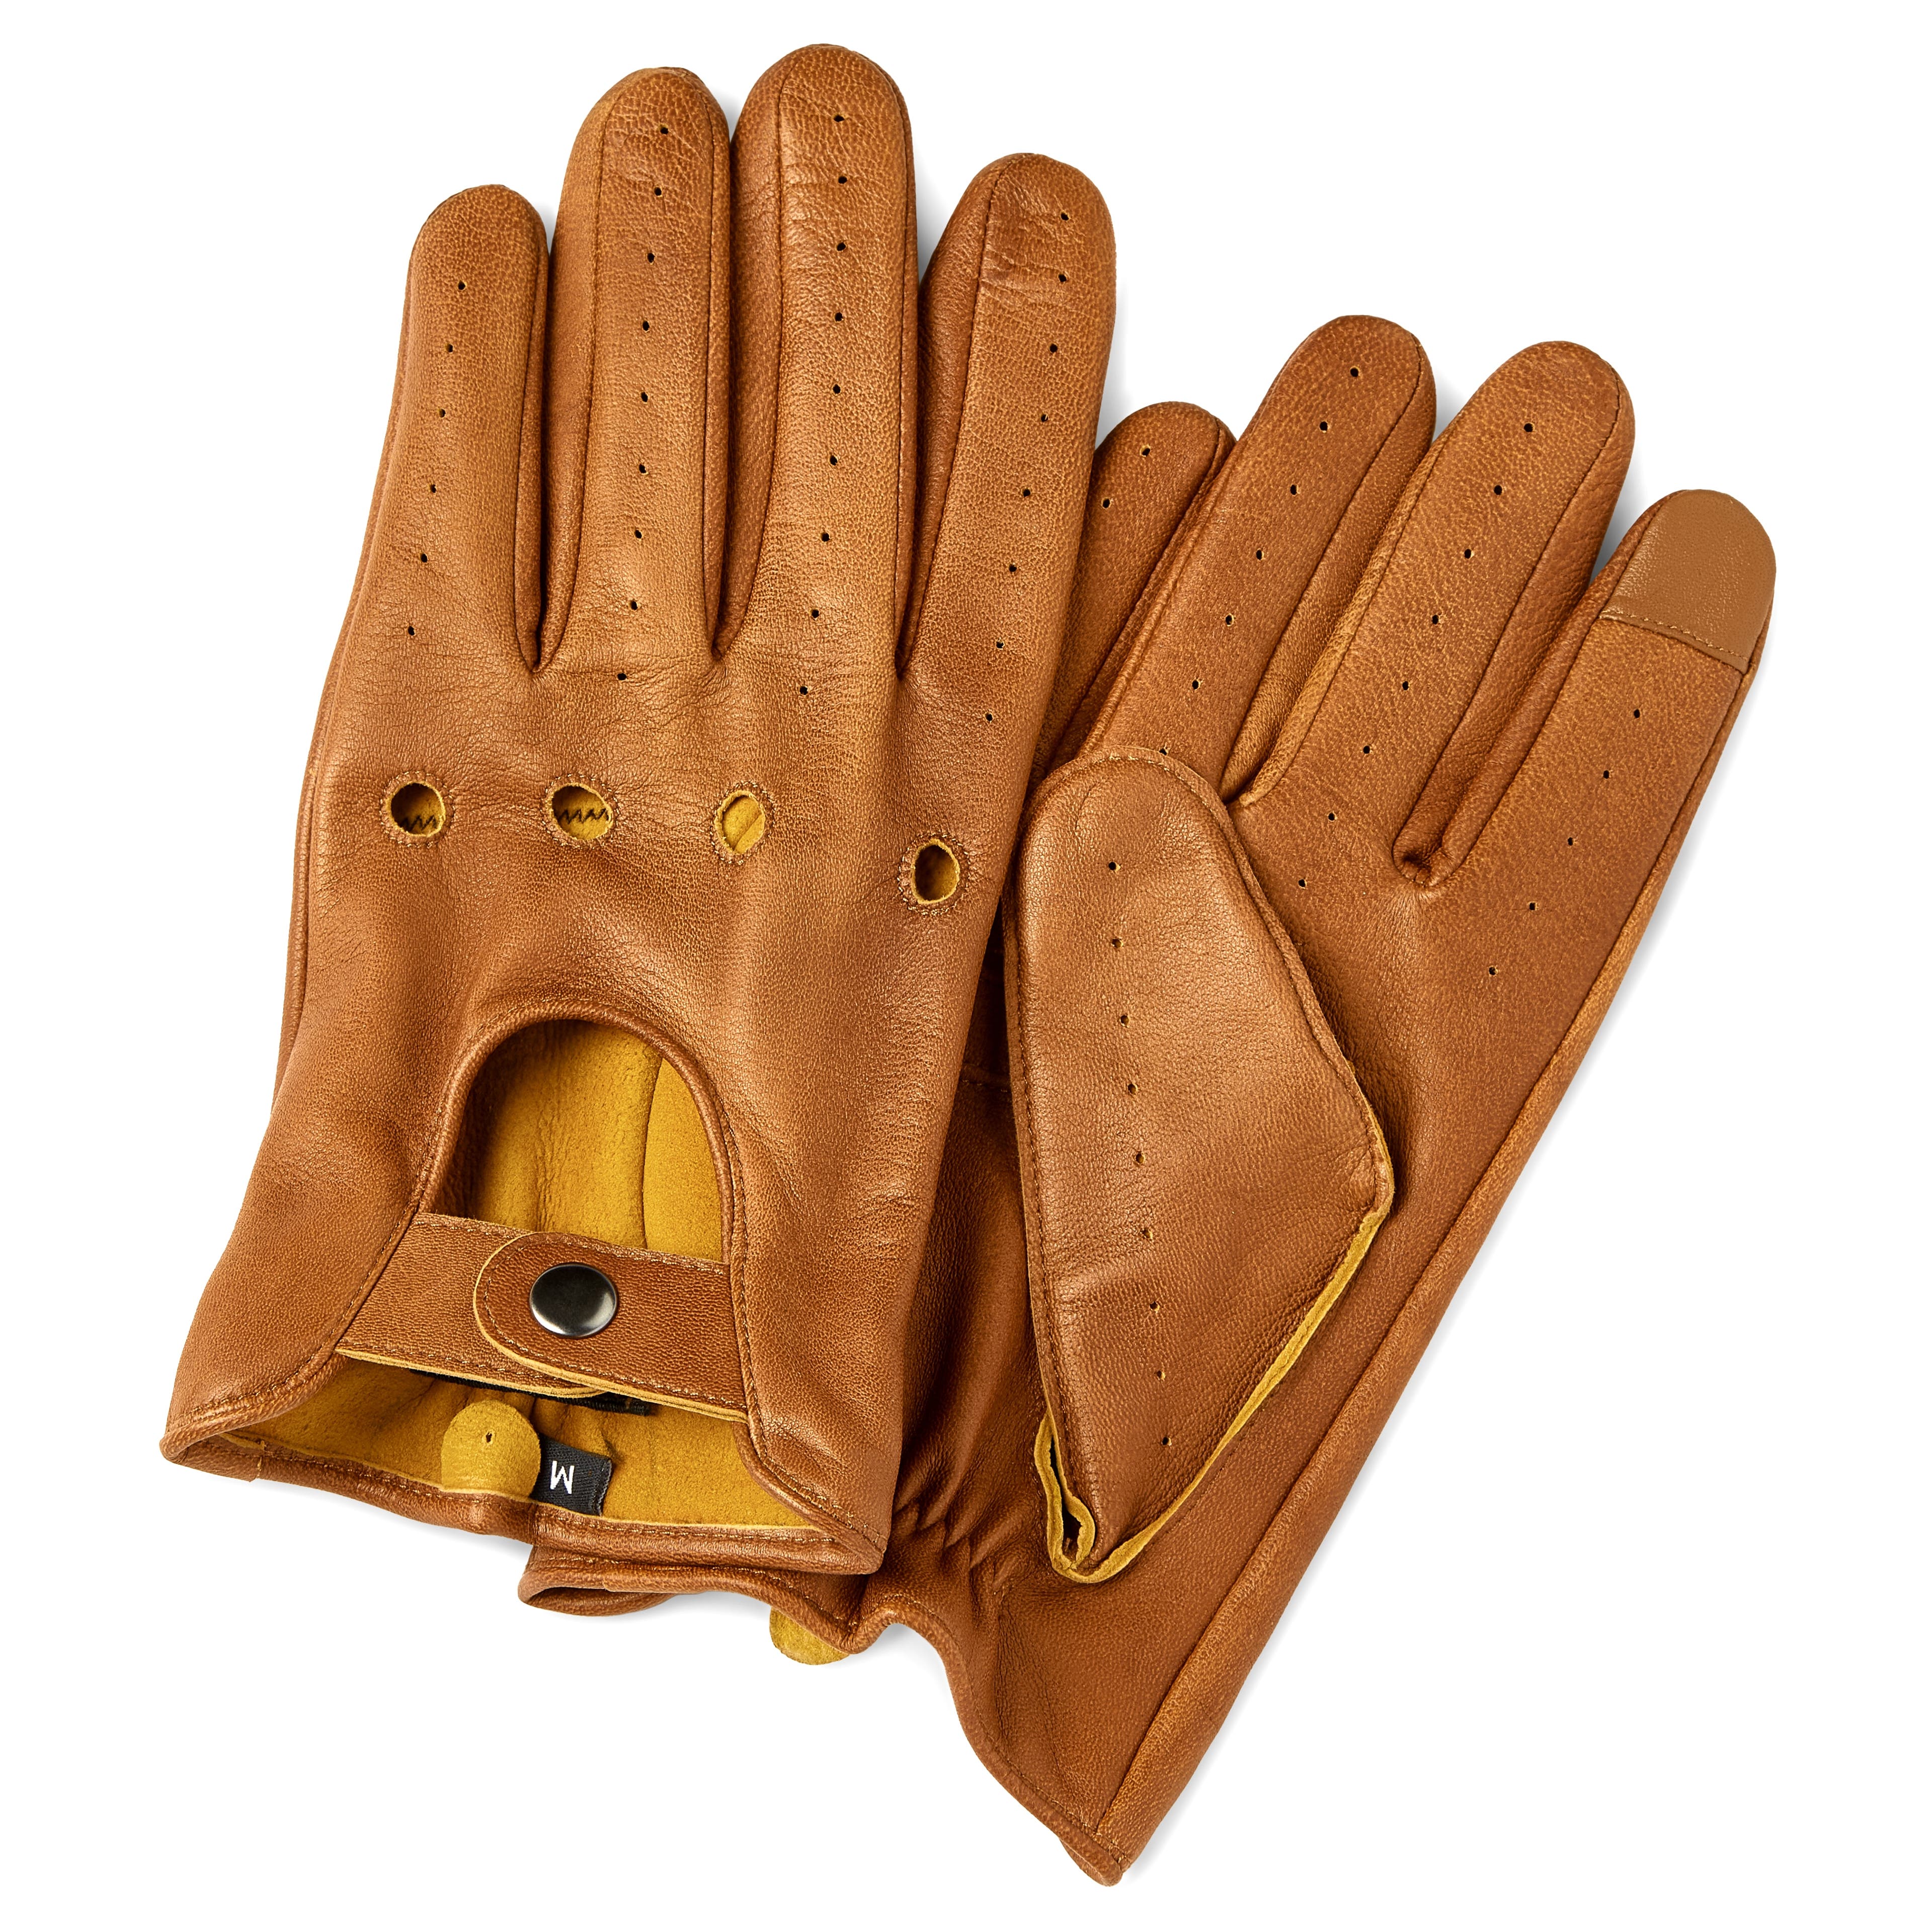 Tan Sheepskin Leather Touchscreen Driving Gloves